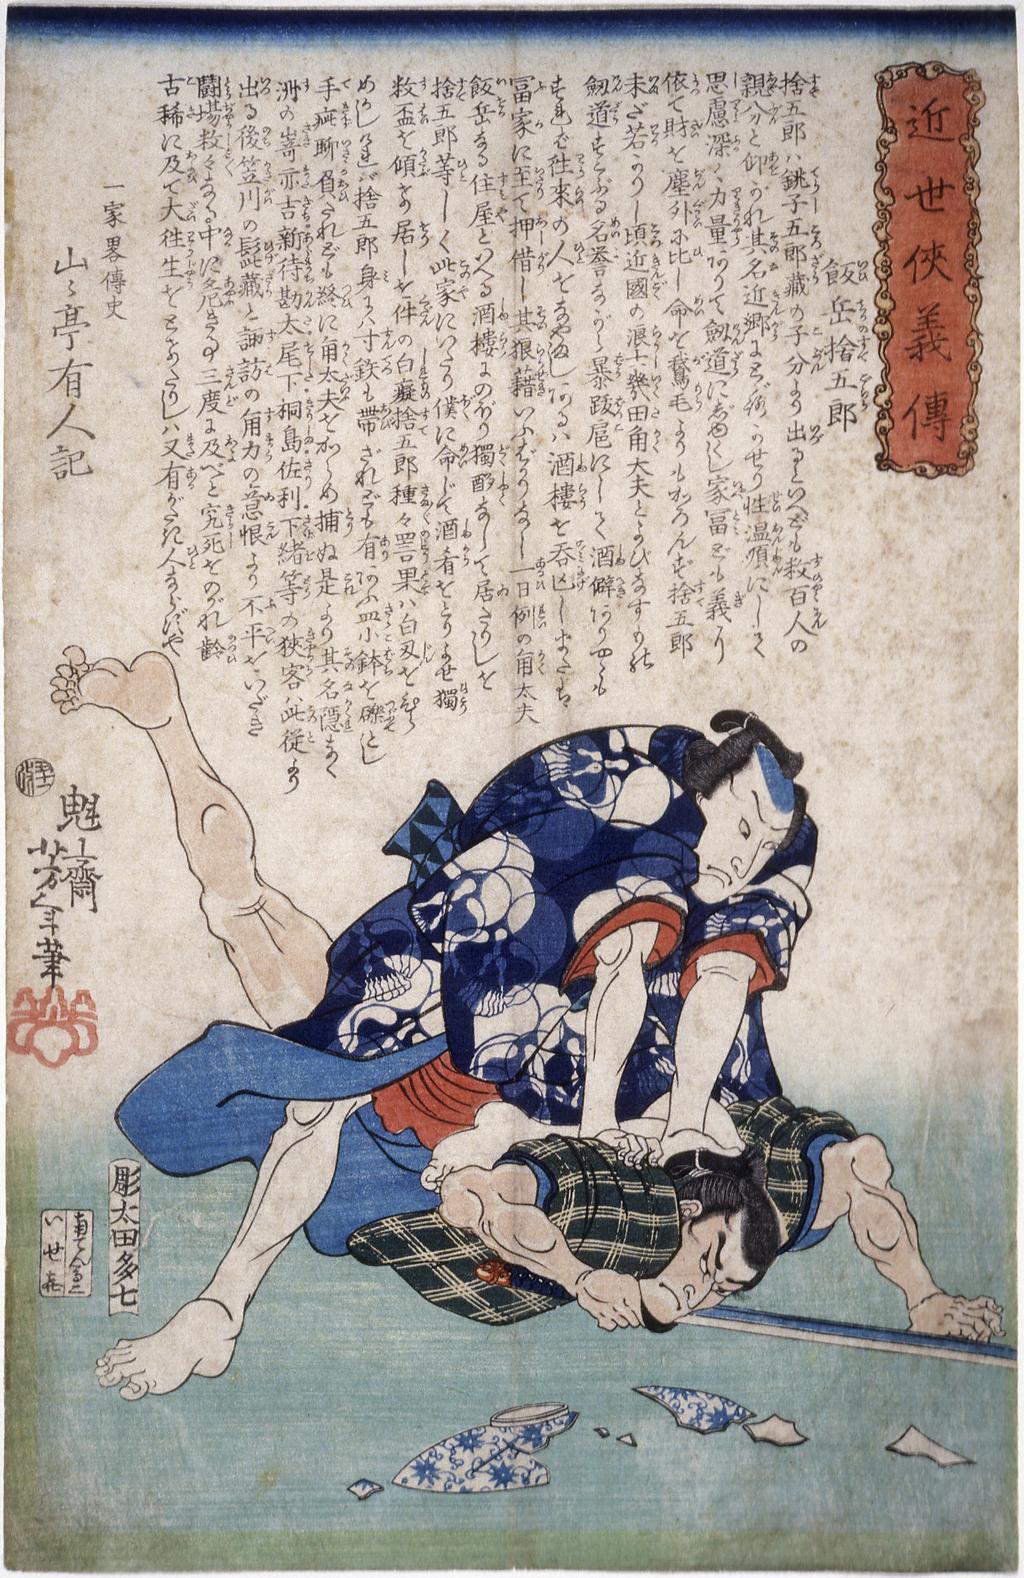 An image of Iiokano Sutegorô, leader of a gambling ring, stabbing an assailant with a sword, from the series of 36 Biographies of modern men (Kinsei kyôgiden). Yoshitoshi, Tsukioka (Japanese, 1839-1892). Colour print from woodblocks. 1865. Ôban, signed: Kaisai Yoshitoshi hitsu, artist’s seal: Kiri, publisher: Iseki (Manyôdô), block-carver: Hori Ôta Tashichi. Biographical text by Sanzantei Arindô (Sankanjin Kôrai), date seal: 11/1865.